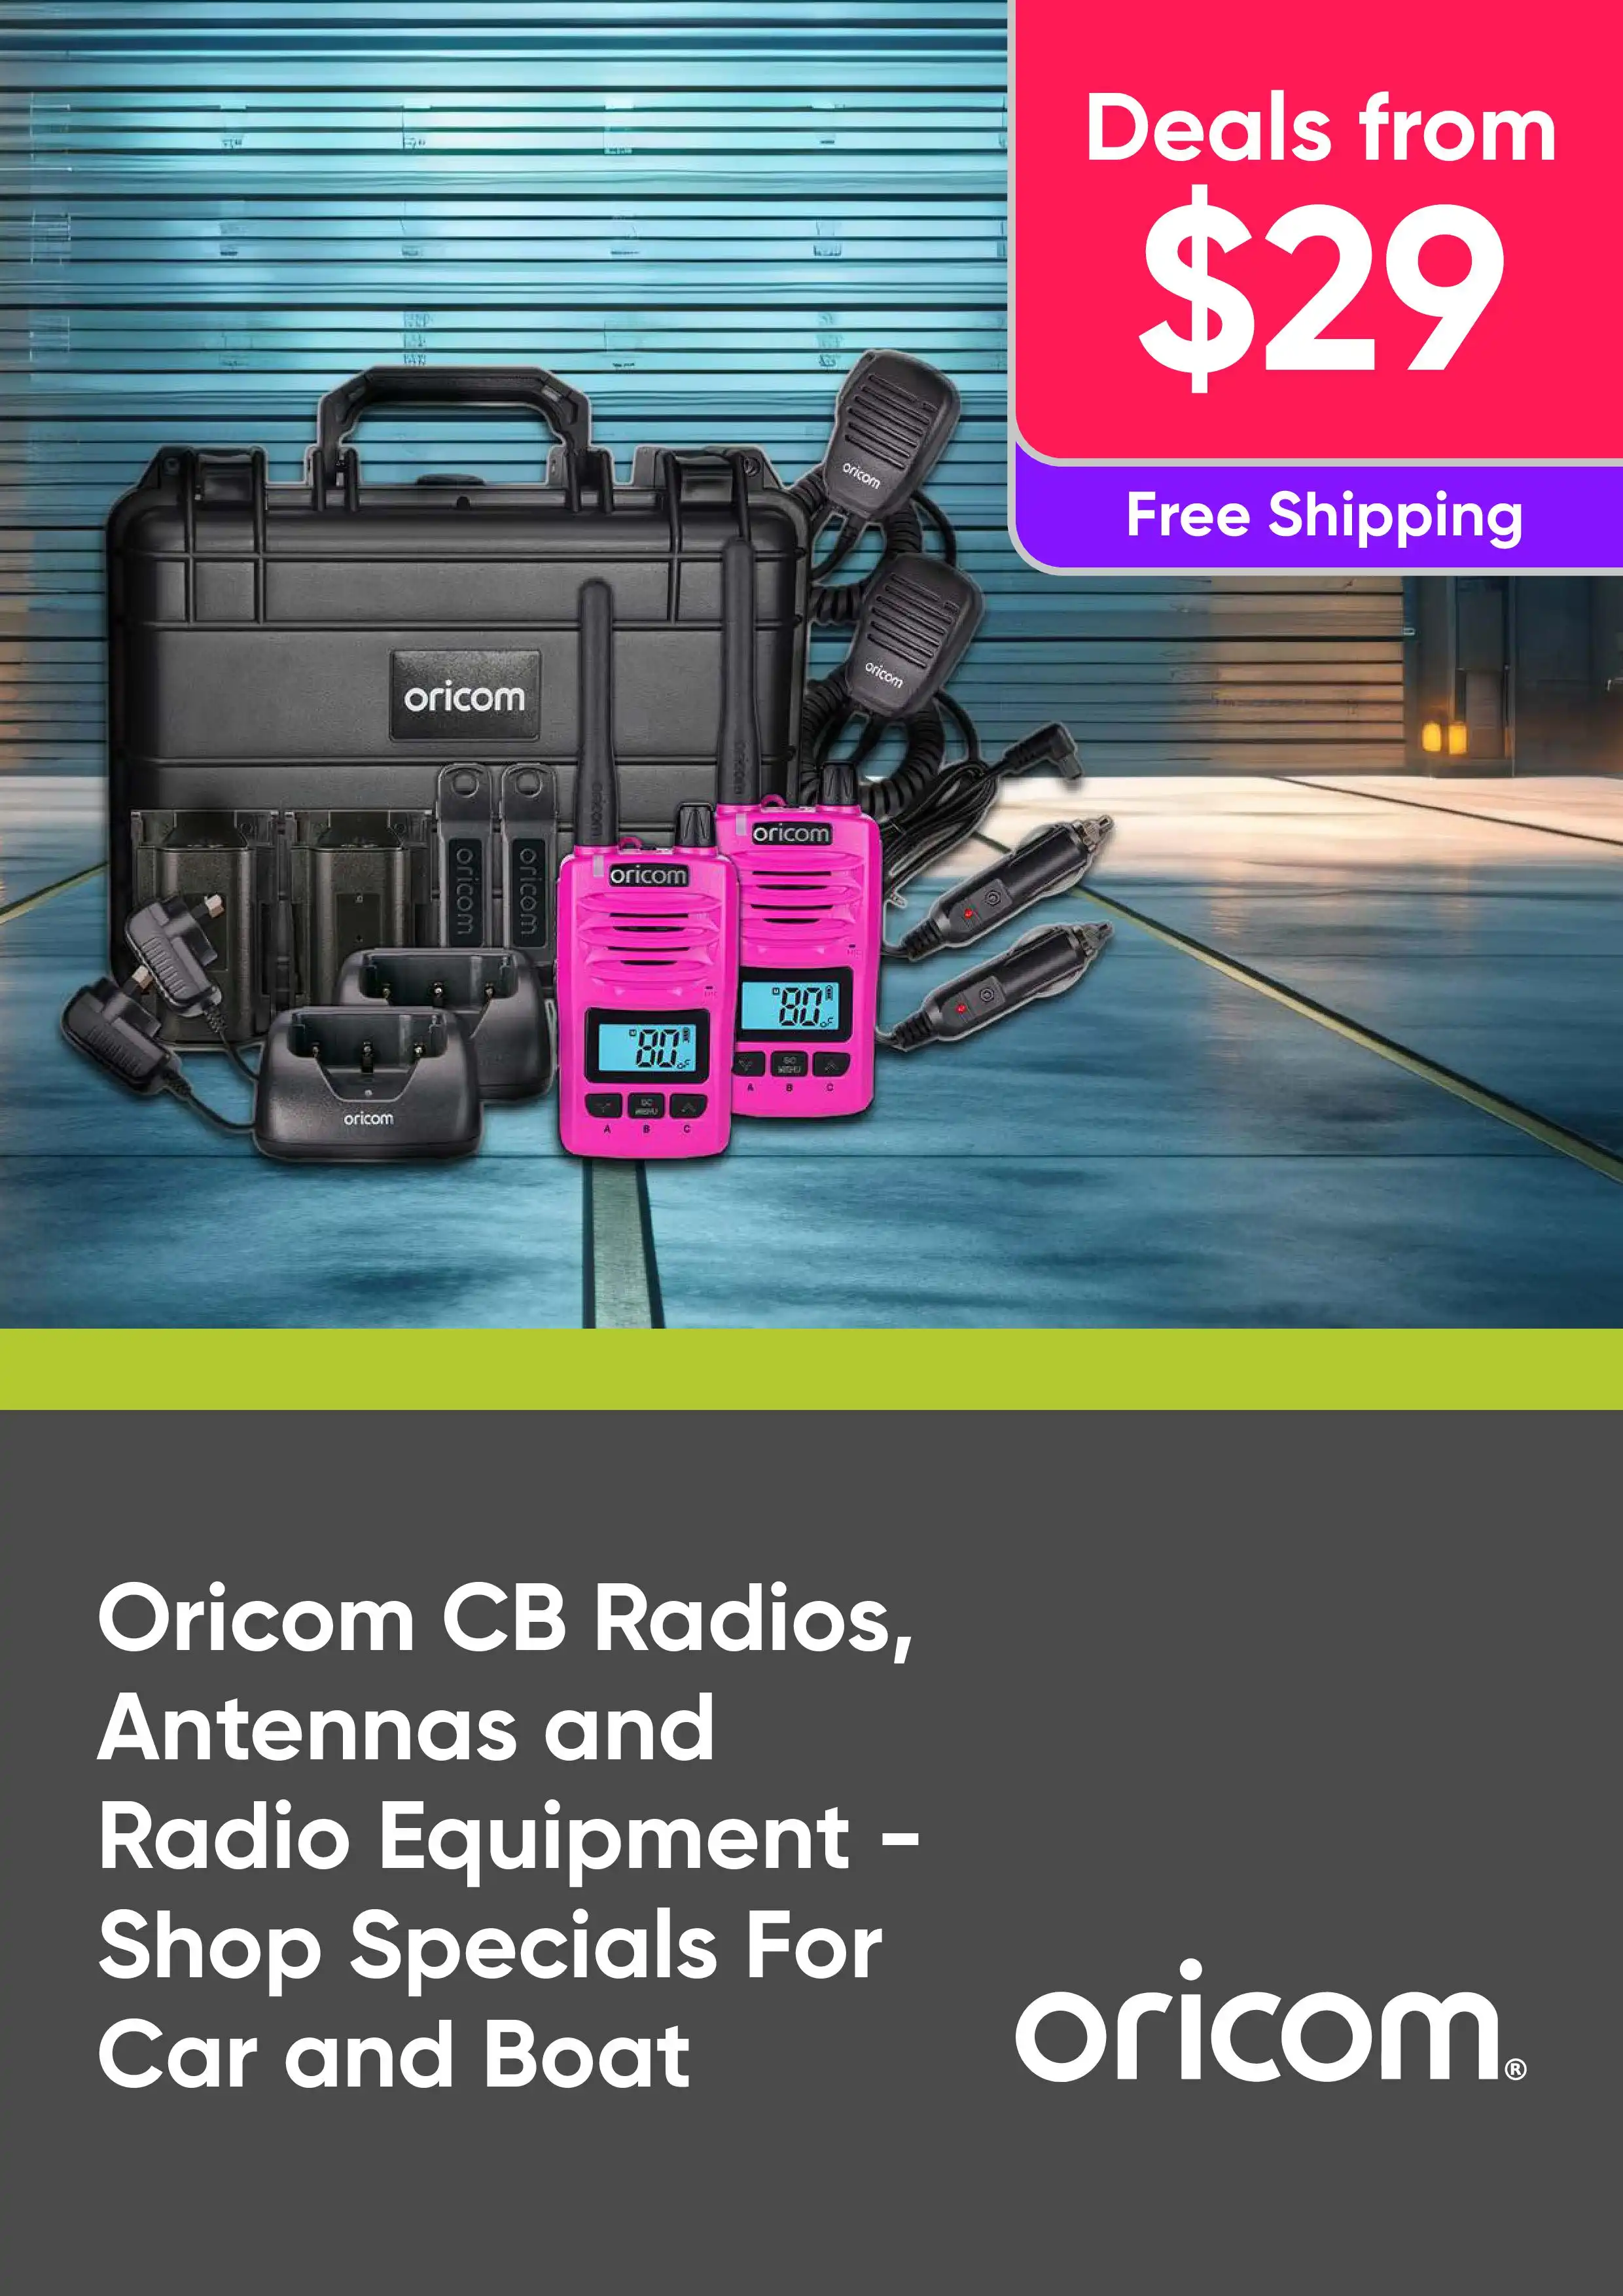 Oricom CB Radios, Antennas and Radio Equipments - Car and Boat